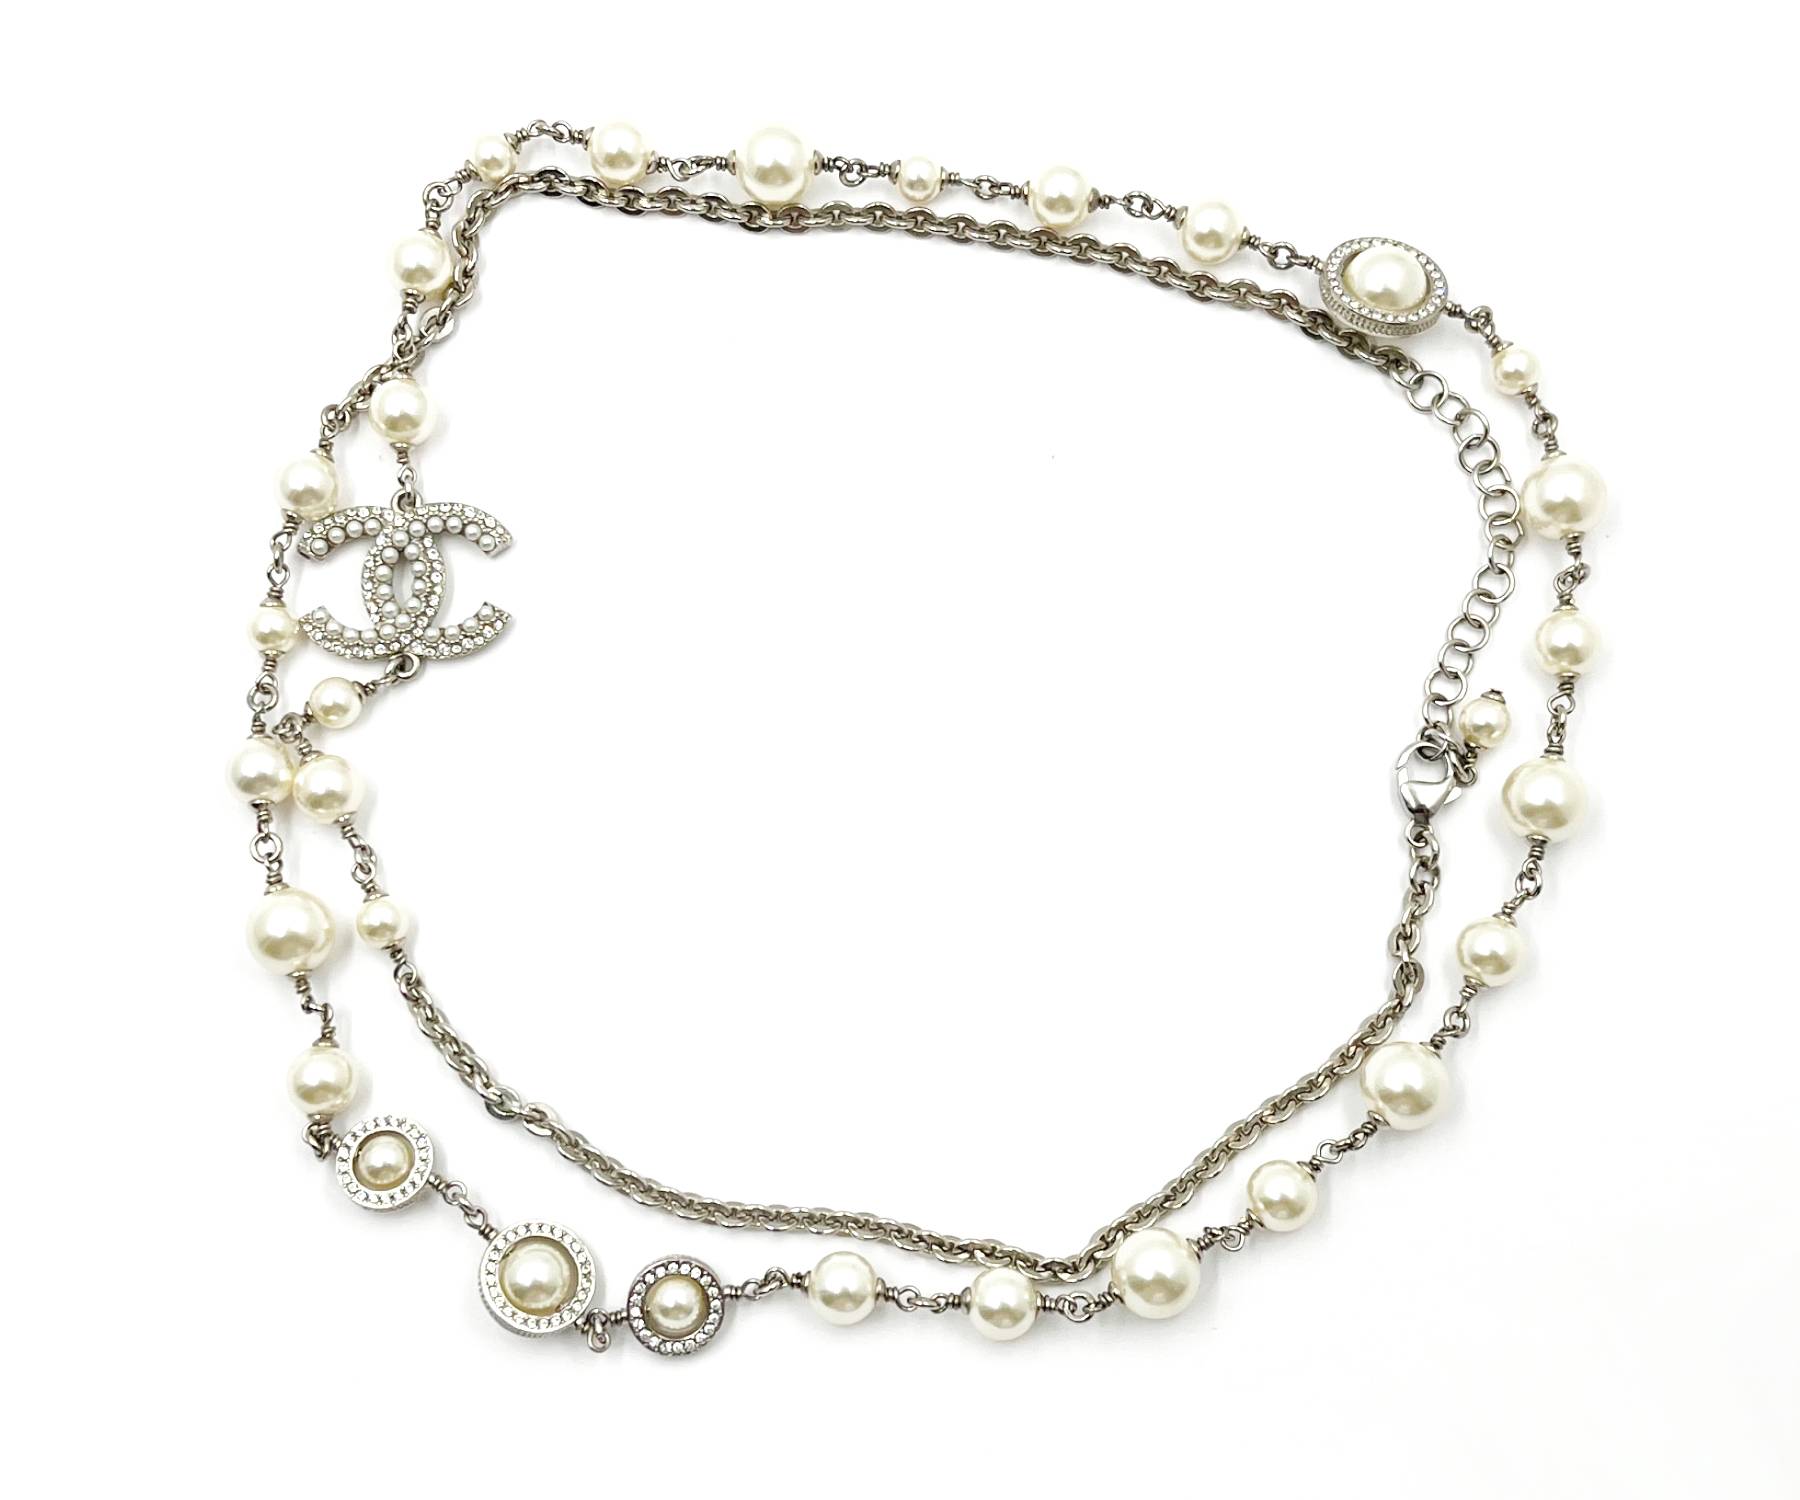 Artisan Handmade Adjustable Fashion Jewelry for Girls/Women Threaded Pura Vida Silver or Gold Beaded Chain with Gemstone Beads Bracelet- Waterproof 